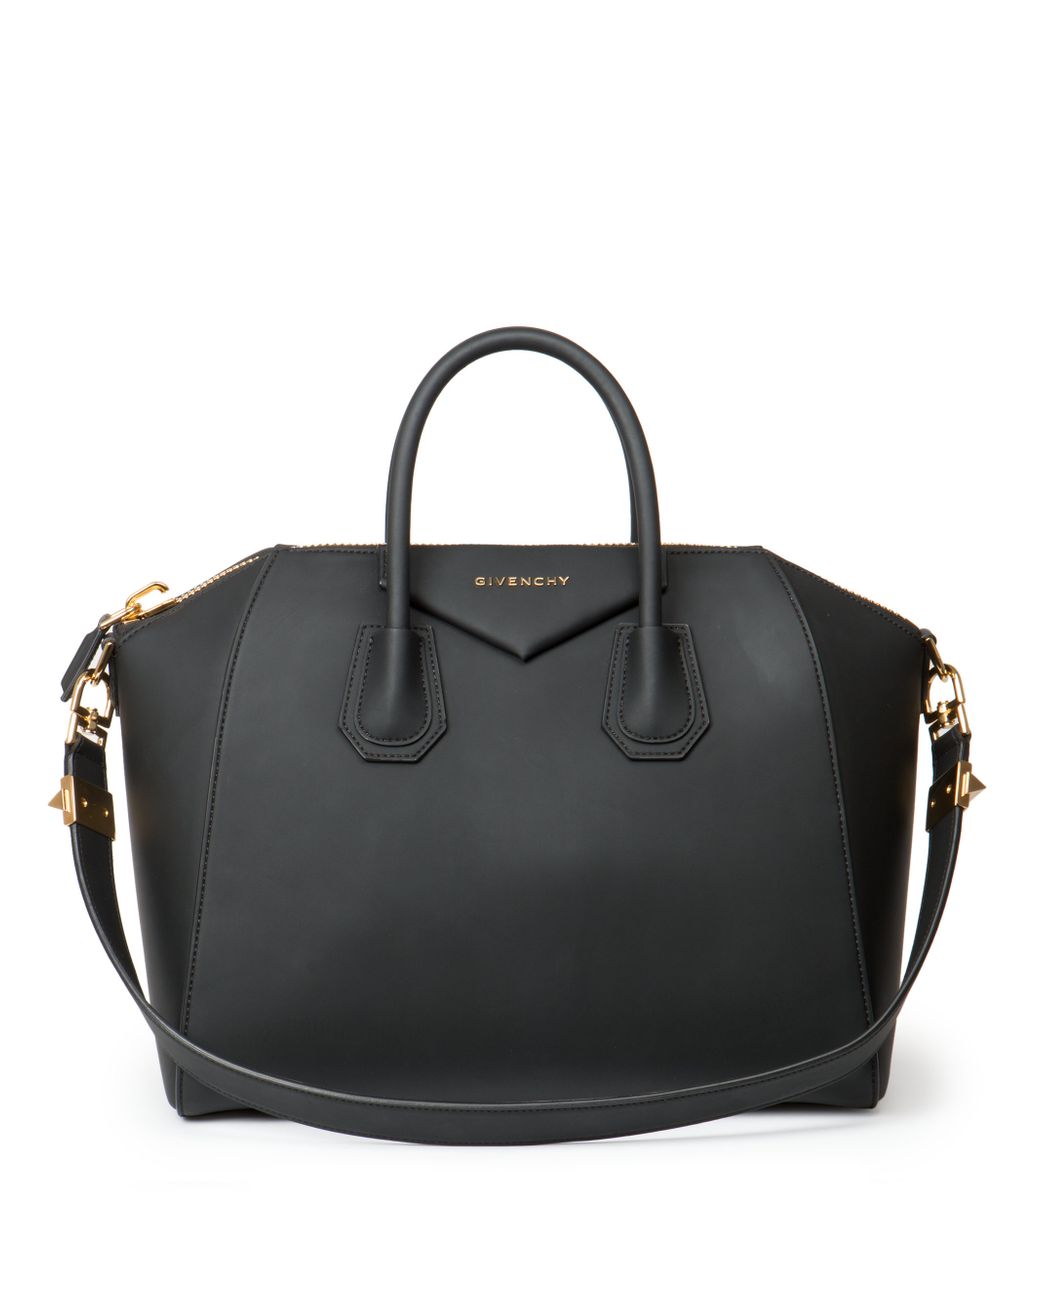 Givenchy Antigona Medium Faux-leather Satchel in Black | Lyst